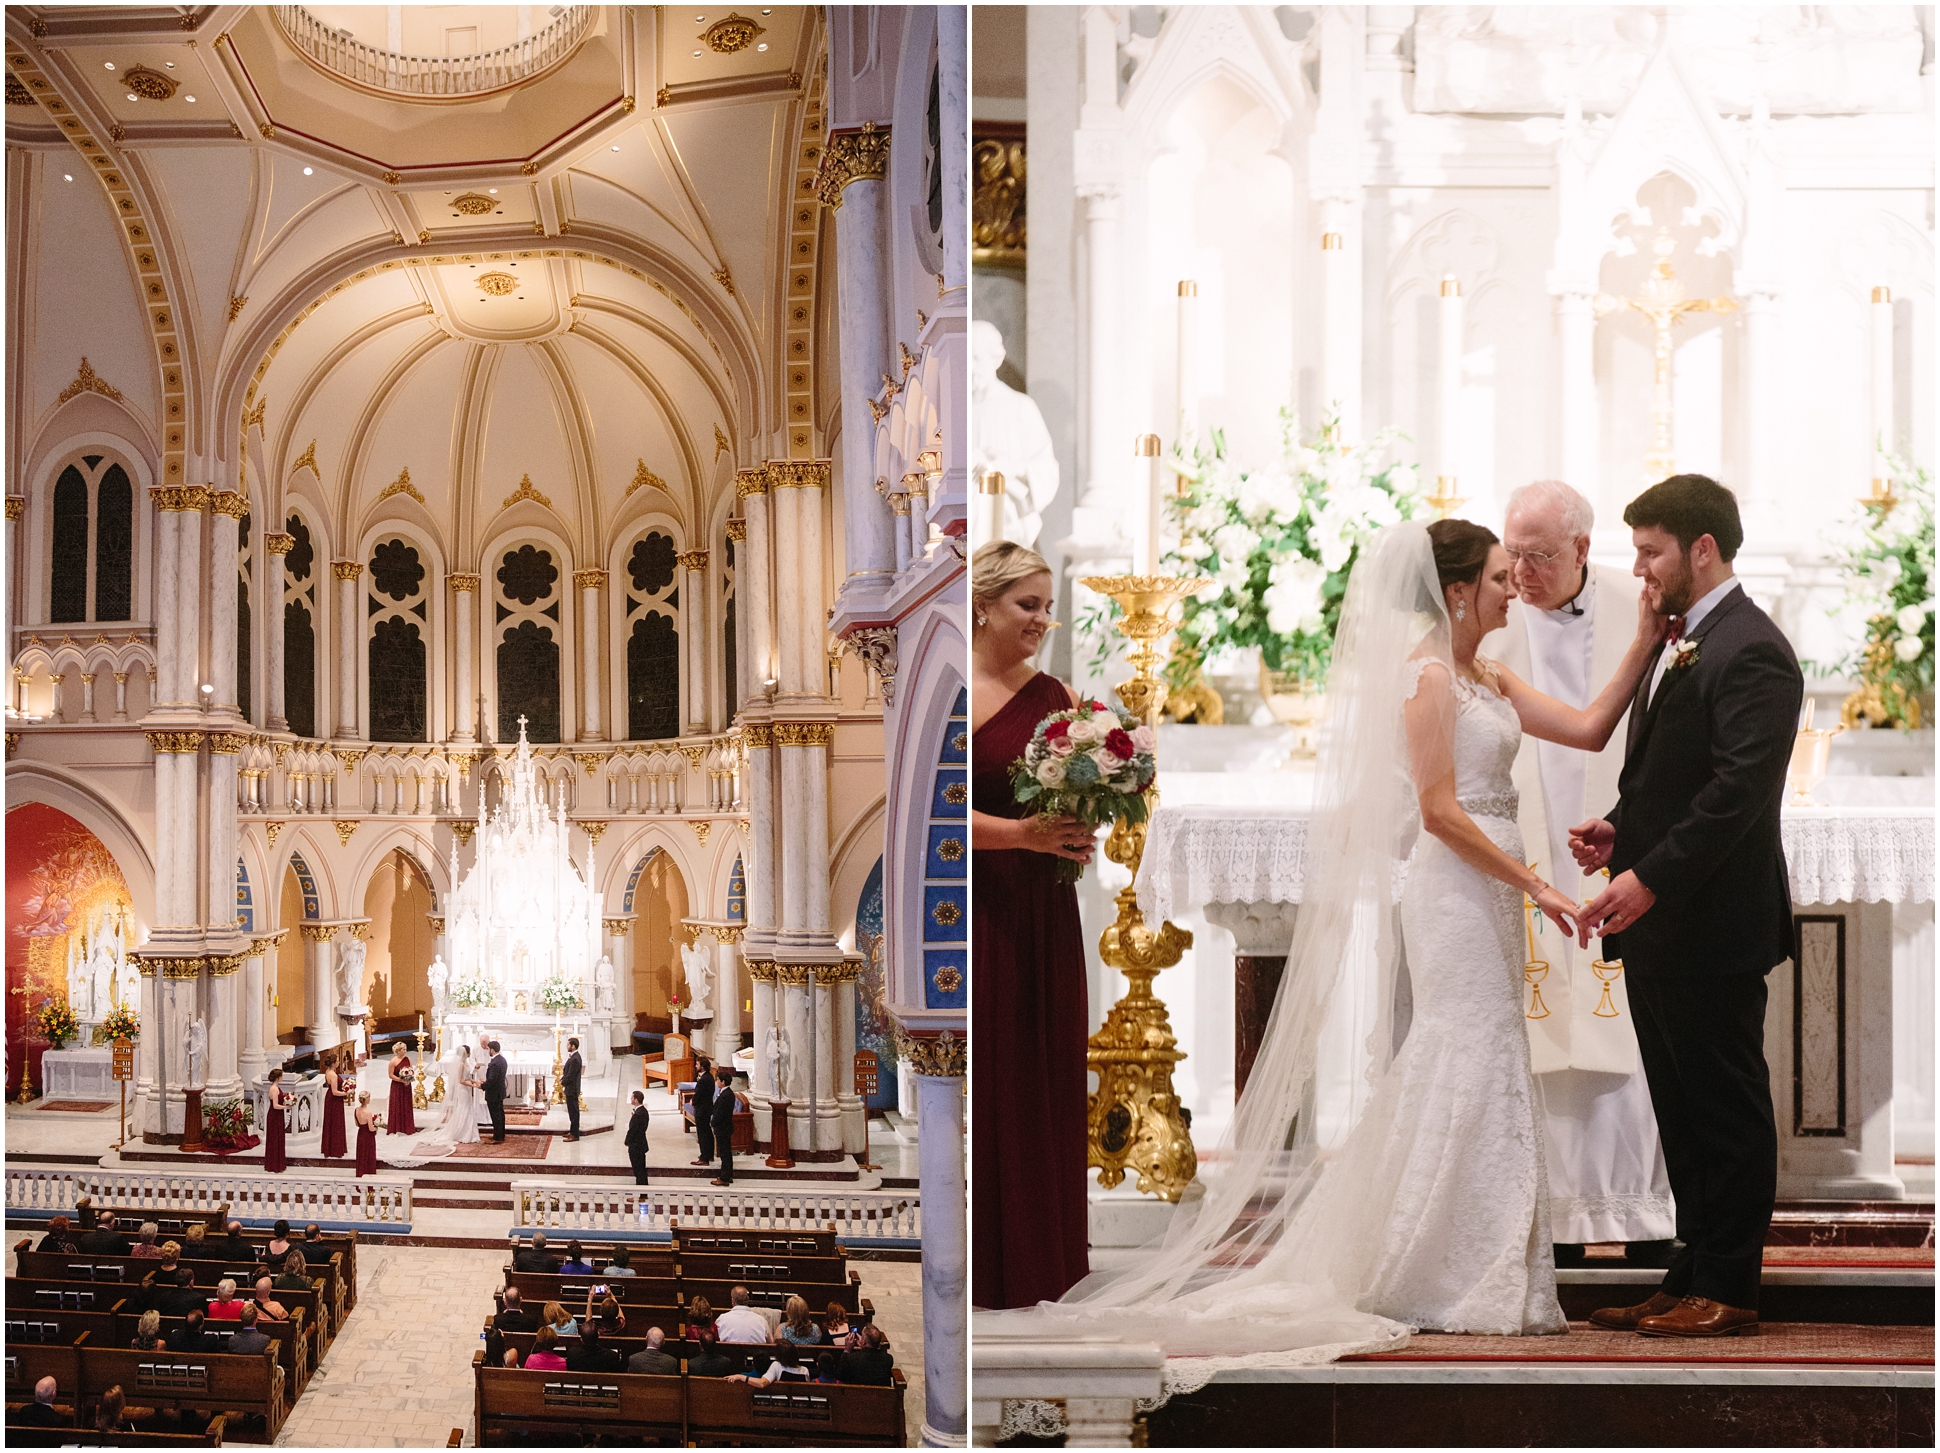 Two Chics Photography | Armory Ballroom and St Joesph Catholic Church Wedding | www.twochicsphotography.com